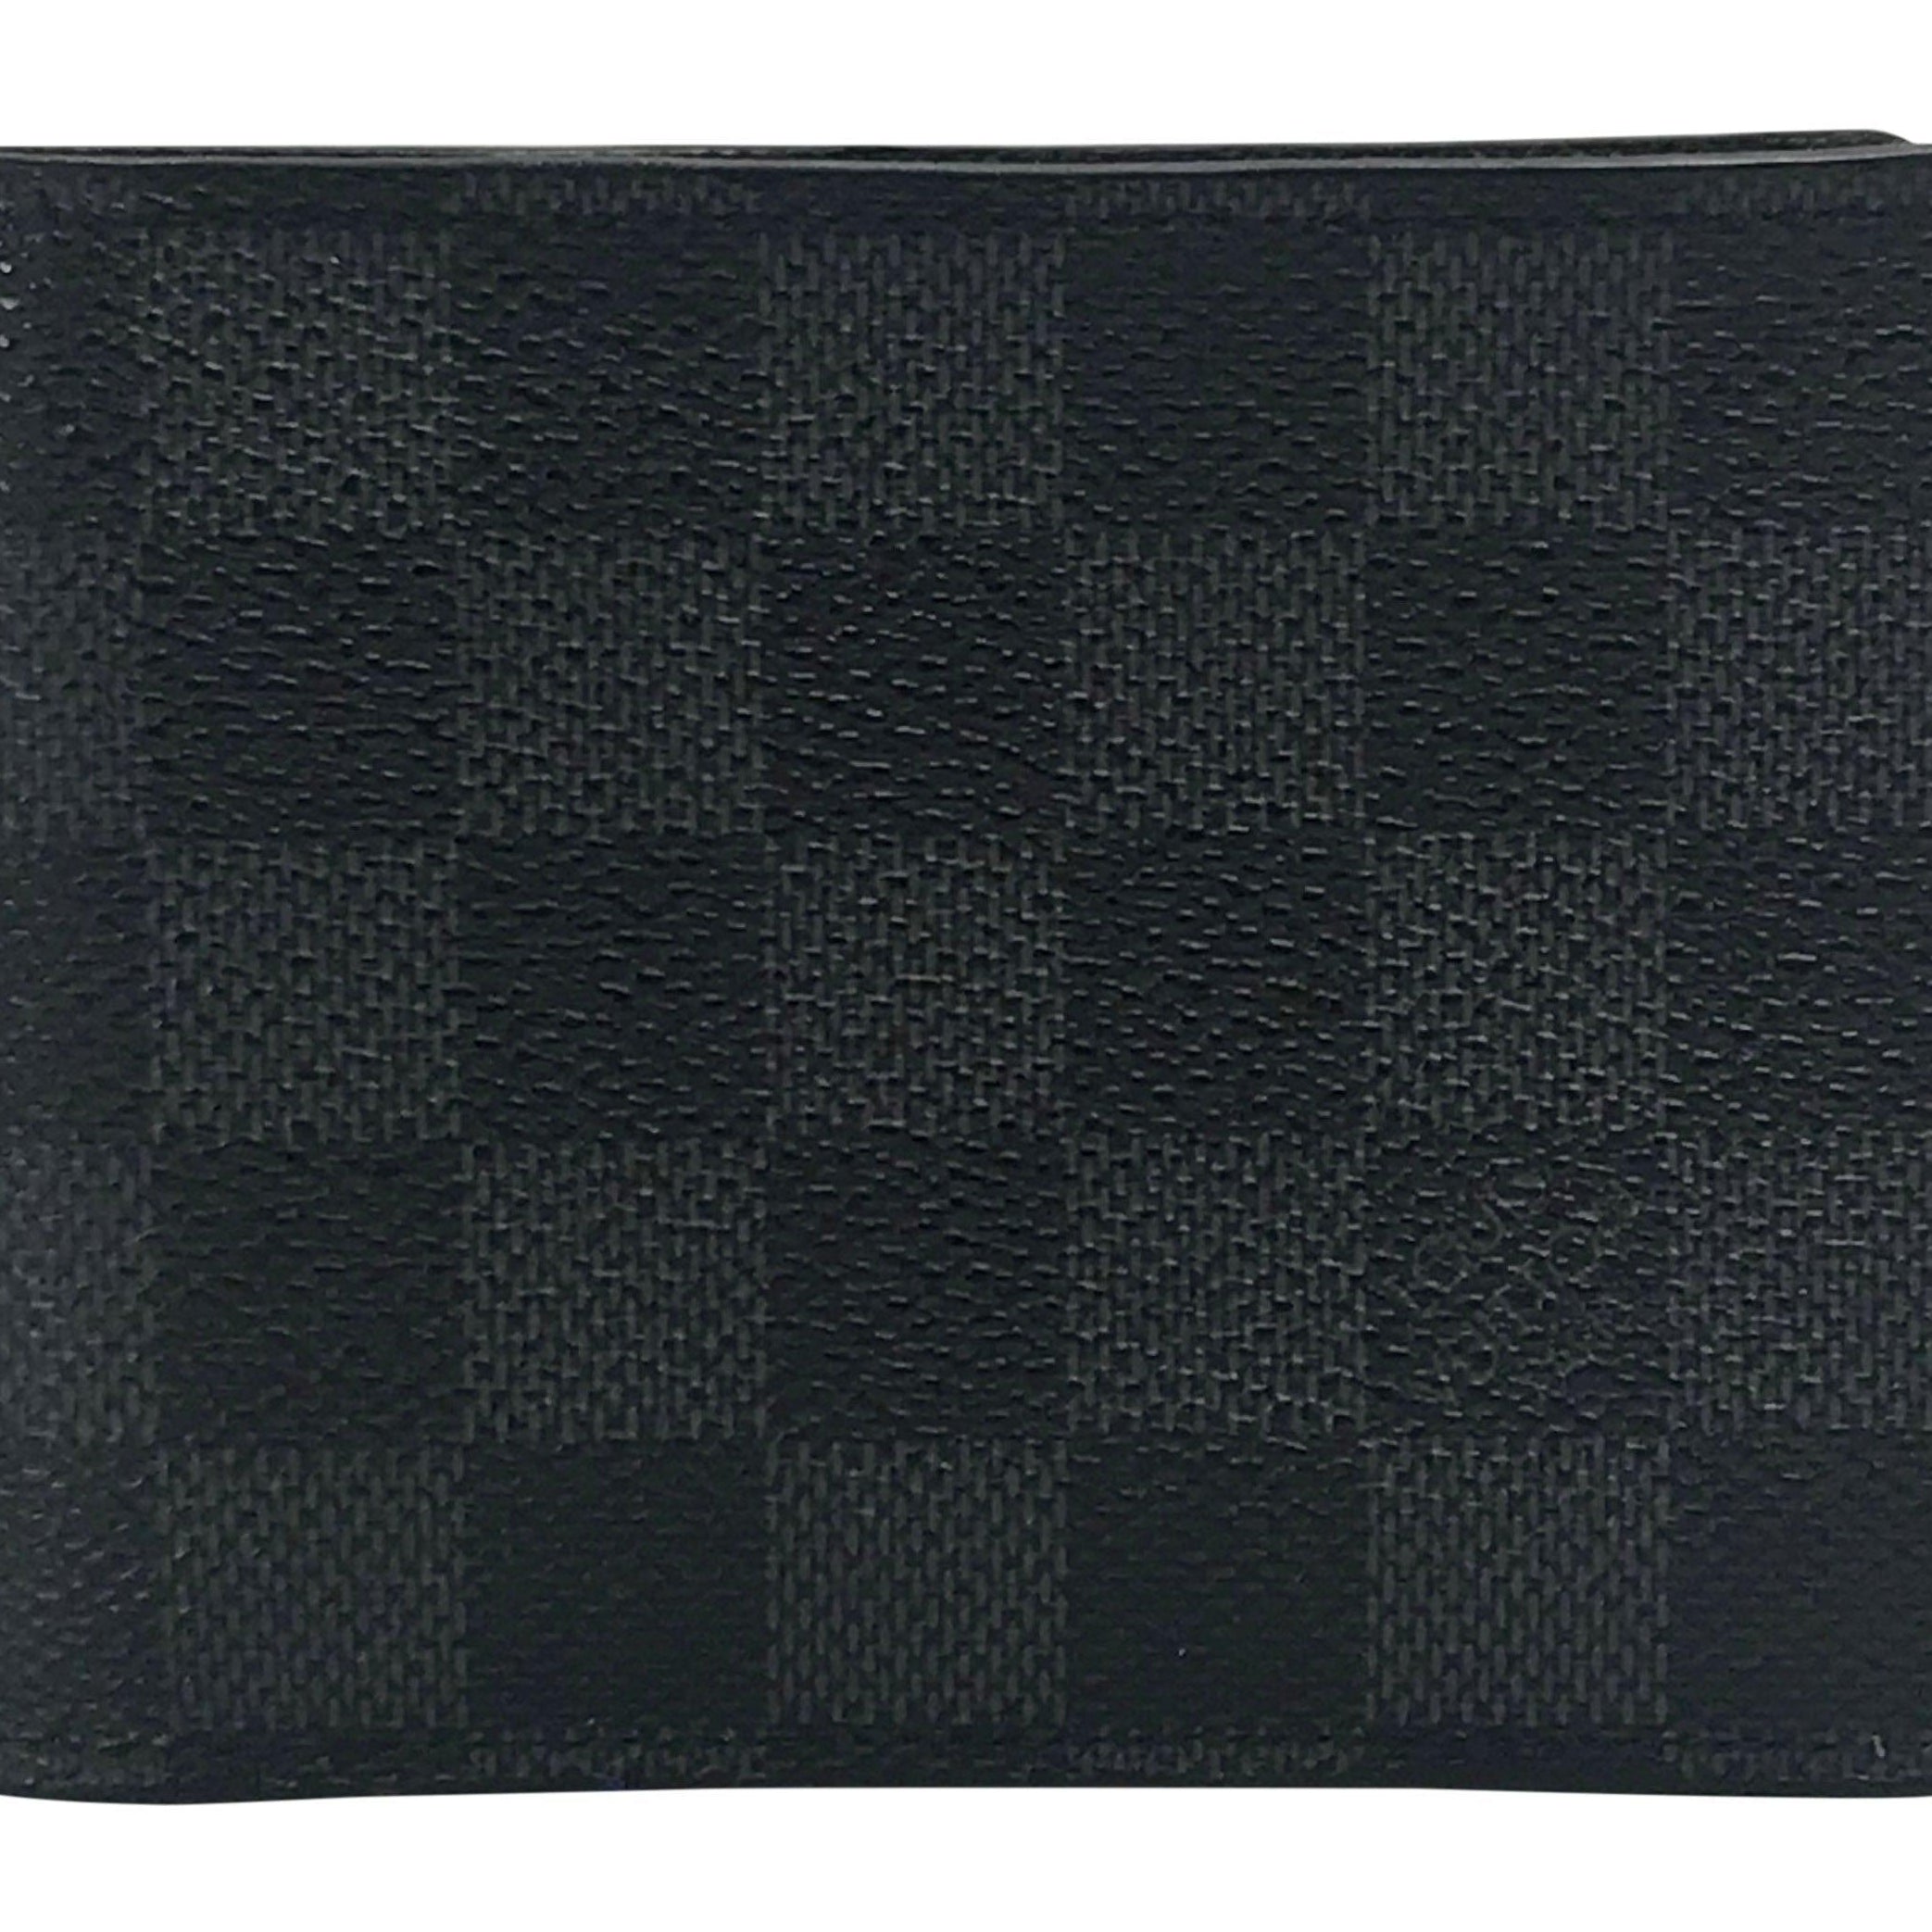 Louis Vuitton Damier Graphite Multiple Wallet – Oliver Jewellery